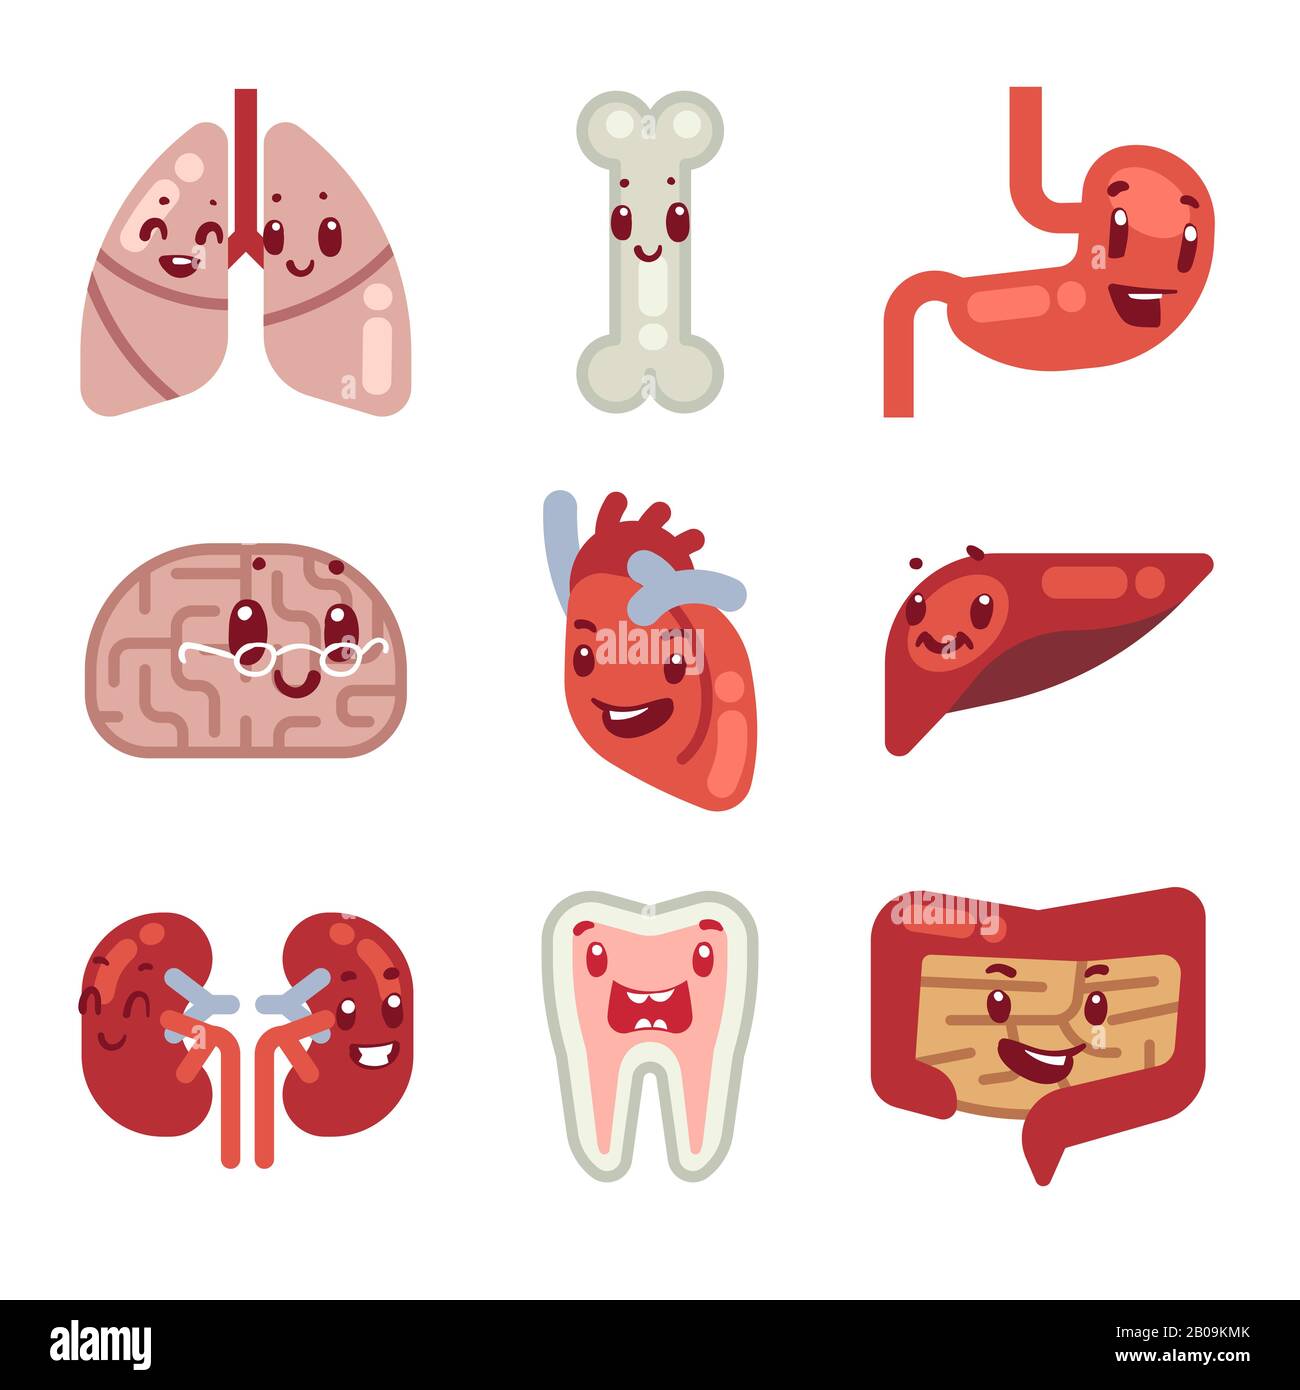 Cute cartoon internal organs vector icons. Characters human organs heart, liver and stomach, illustration of vital organs Stock Vector